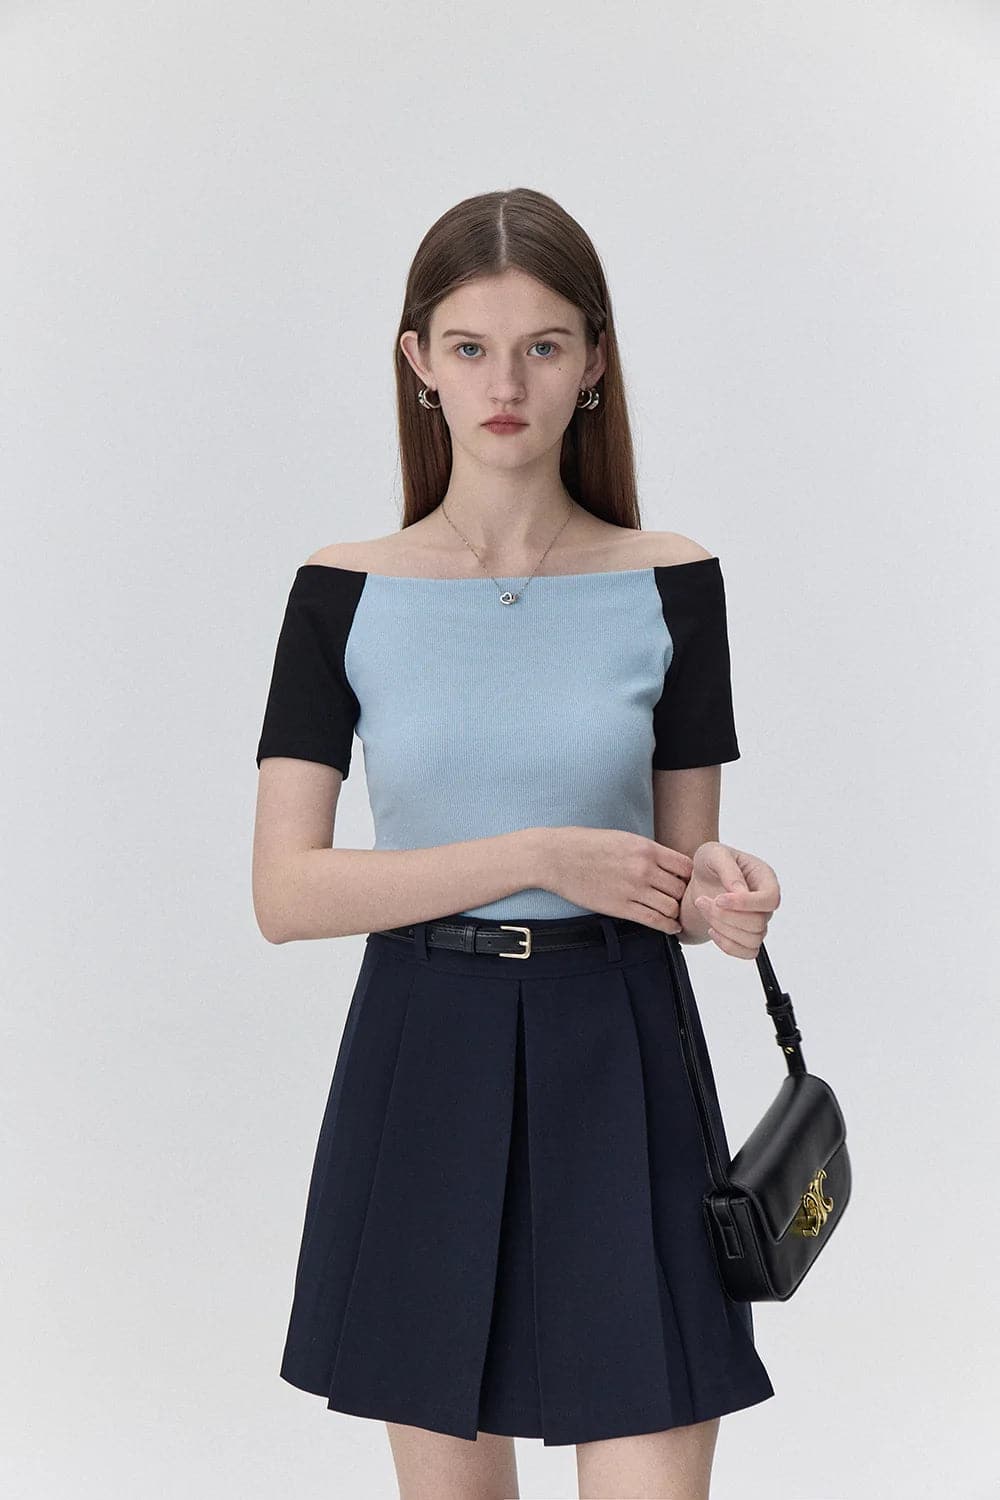 Elegant Contrast Colorblock Knit Top - Versatile and Fashionable